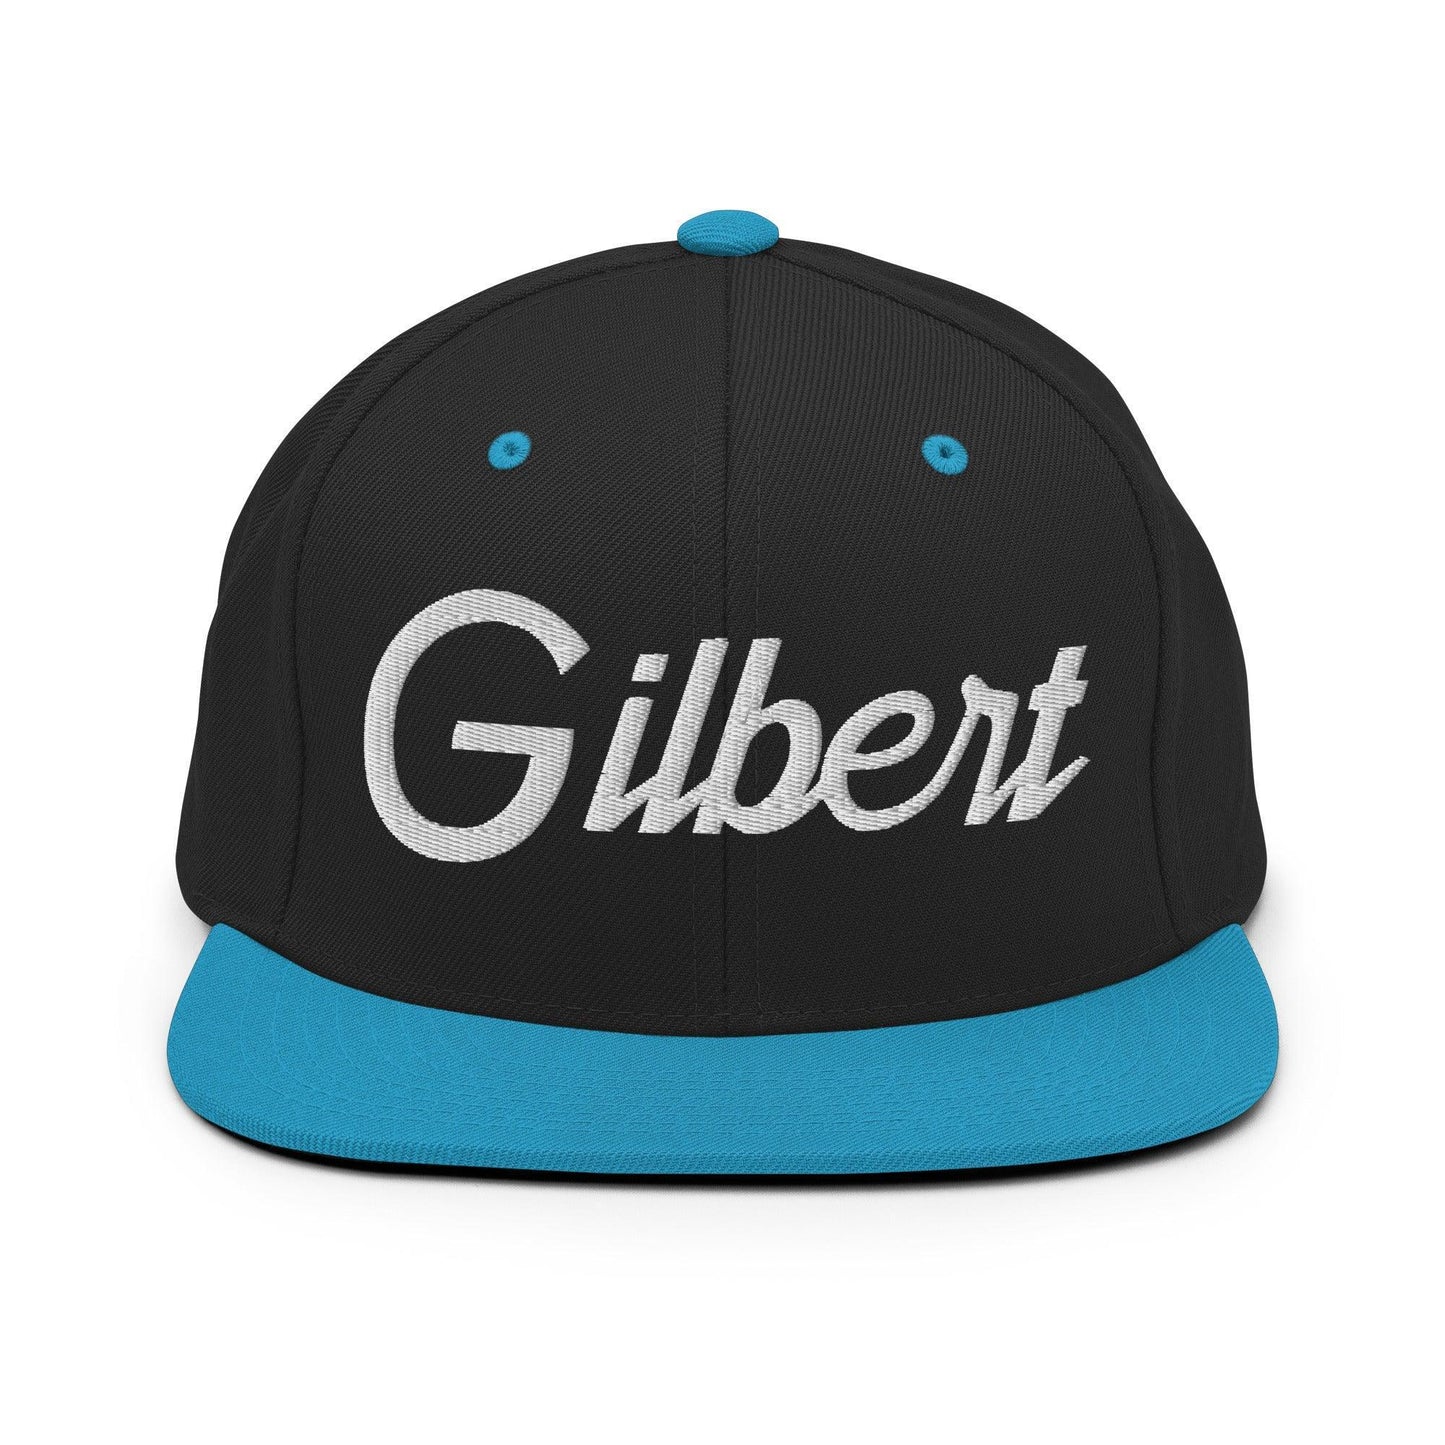 Gilbert Script Snapback Hat Black Teal